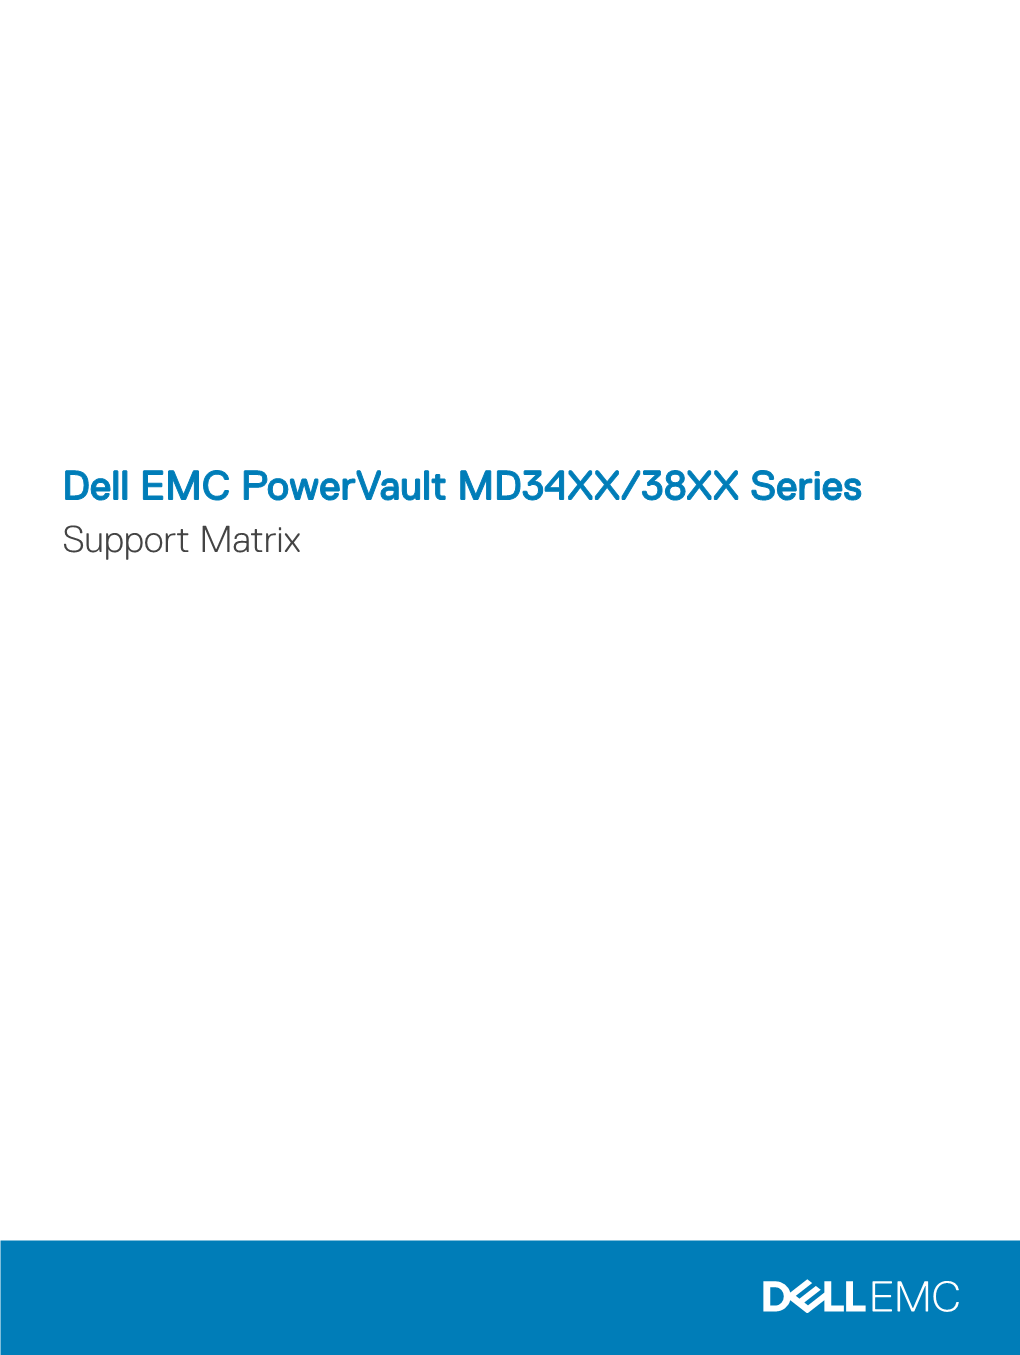 Dell EMC Powervault MD34XX 38XX Series Support Matrix